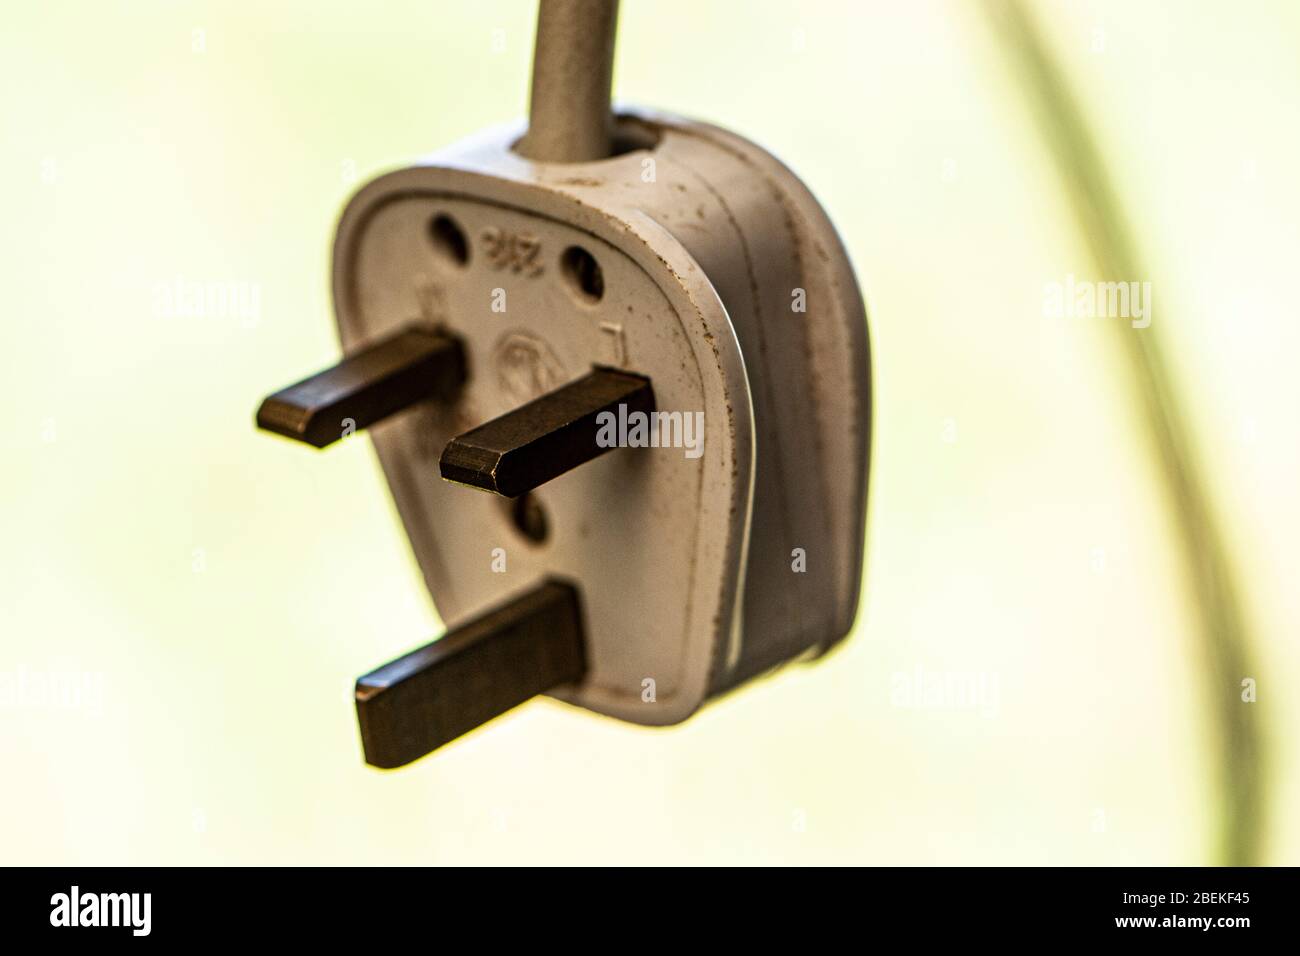 electric plug Stock Photo